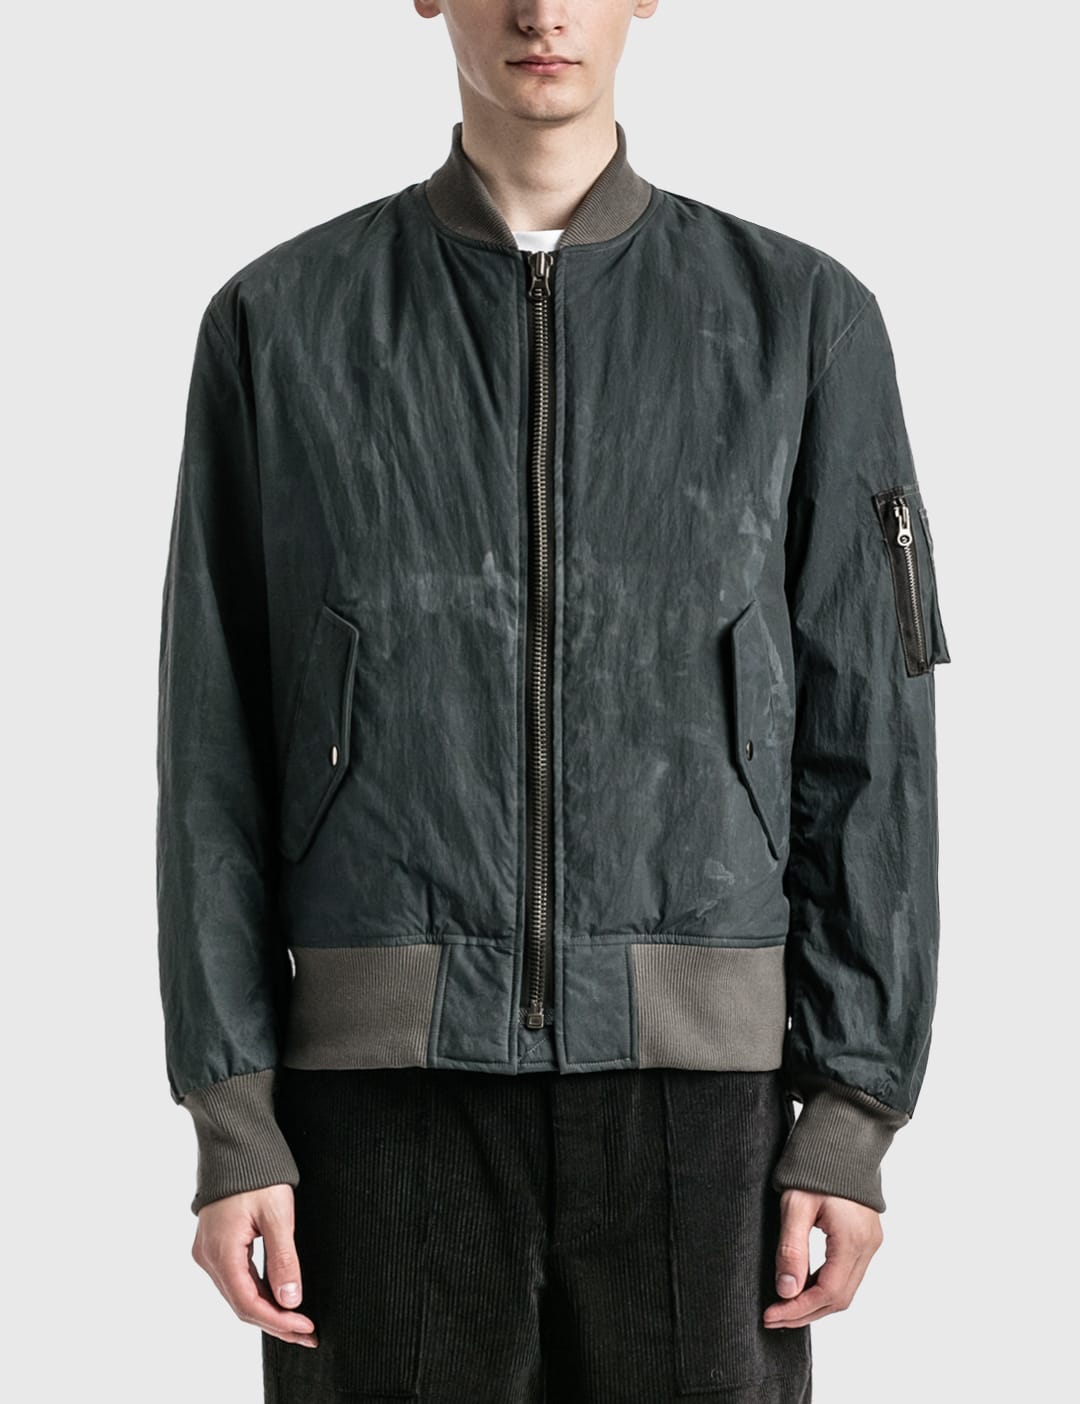 Darenimo - MA-1 Jacket | HBX - Globally Curated Fashion and